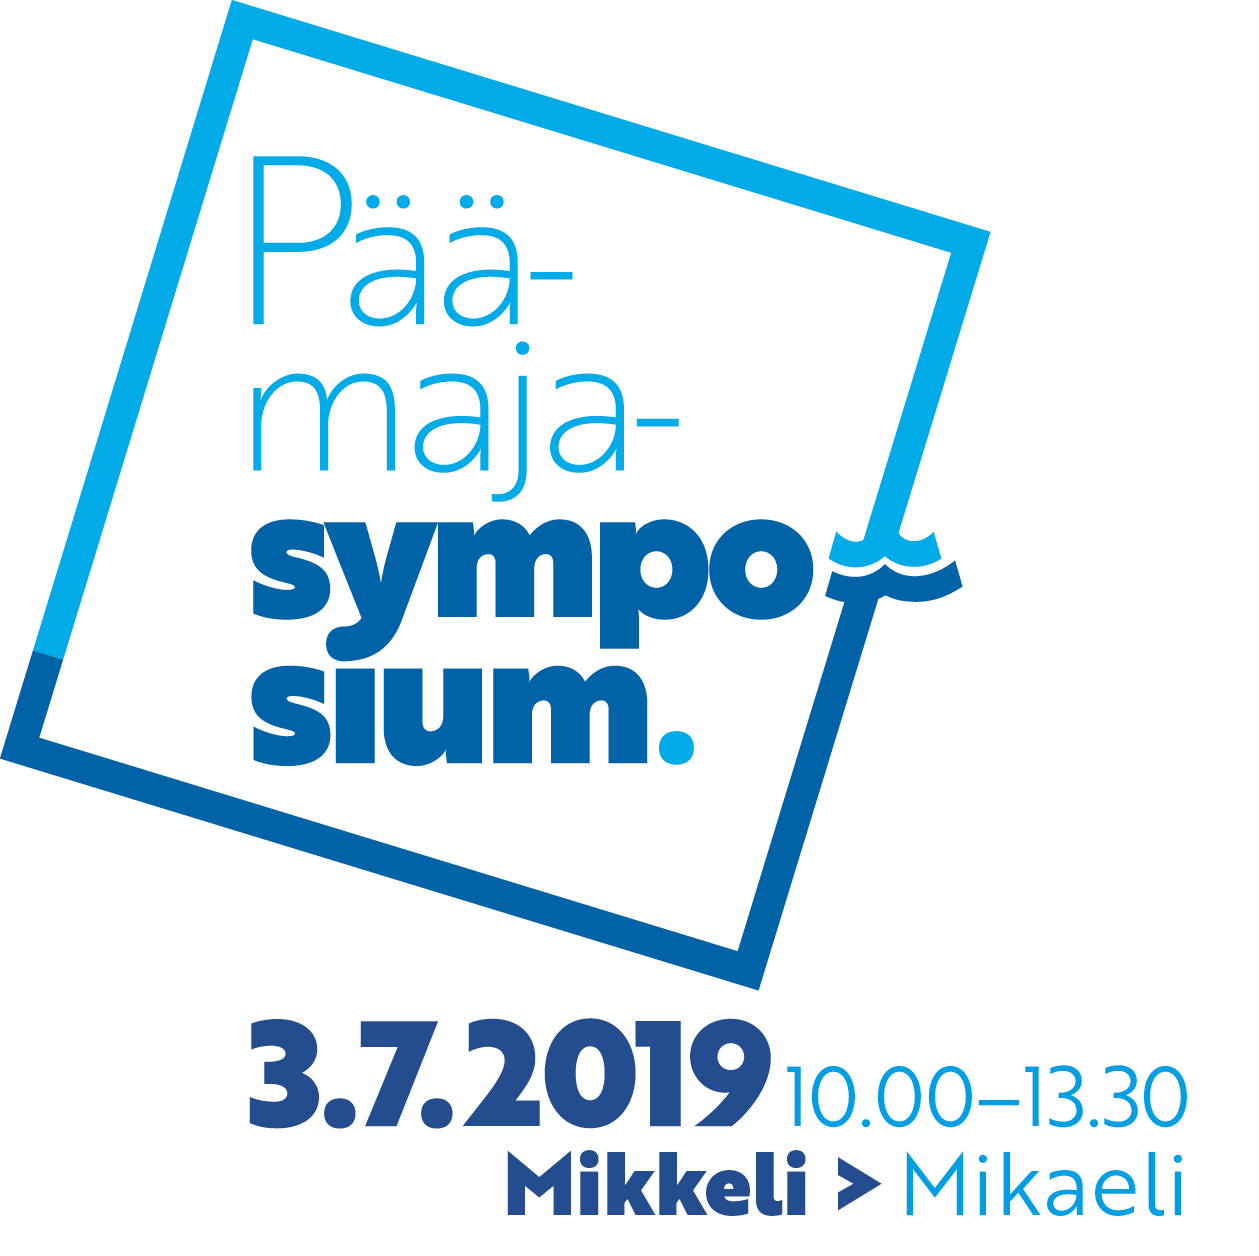 Päämajasymposium Mikkelin Mikaeli 3.7.2019 9.30-13.30